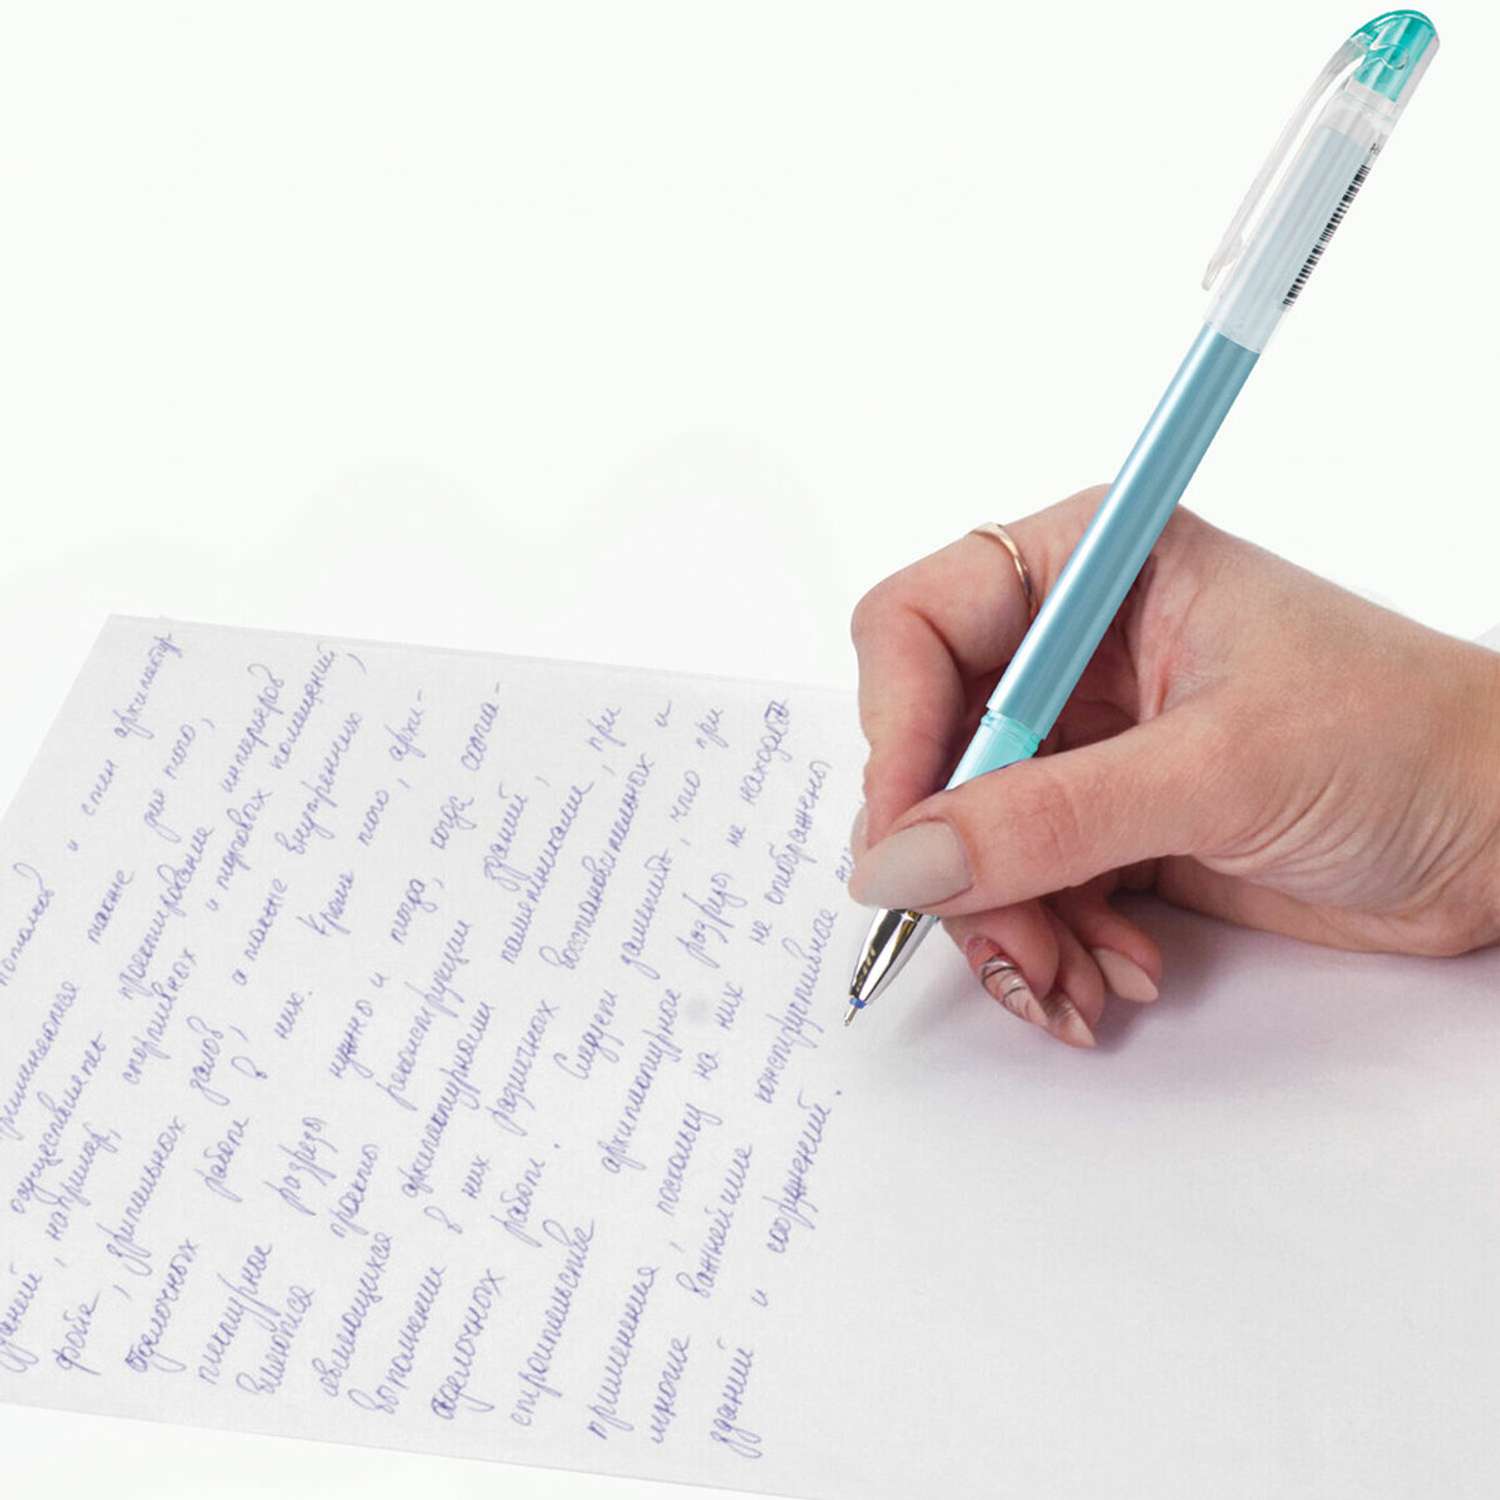 Ручки гелевые Staff пиши-стирай College набор 2 цвета синяя и черная - фото 8